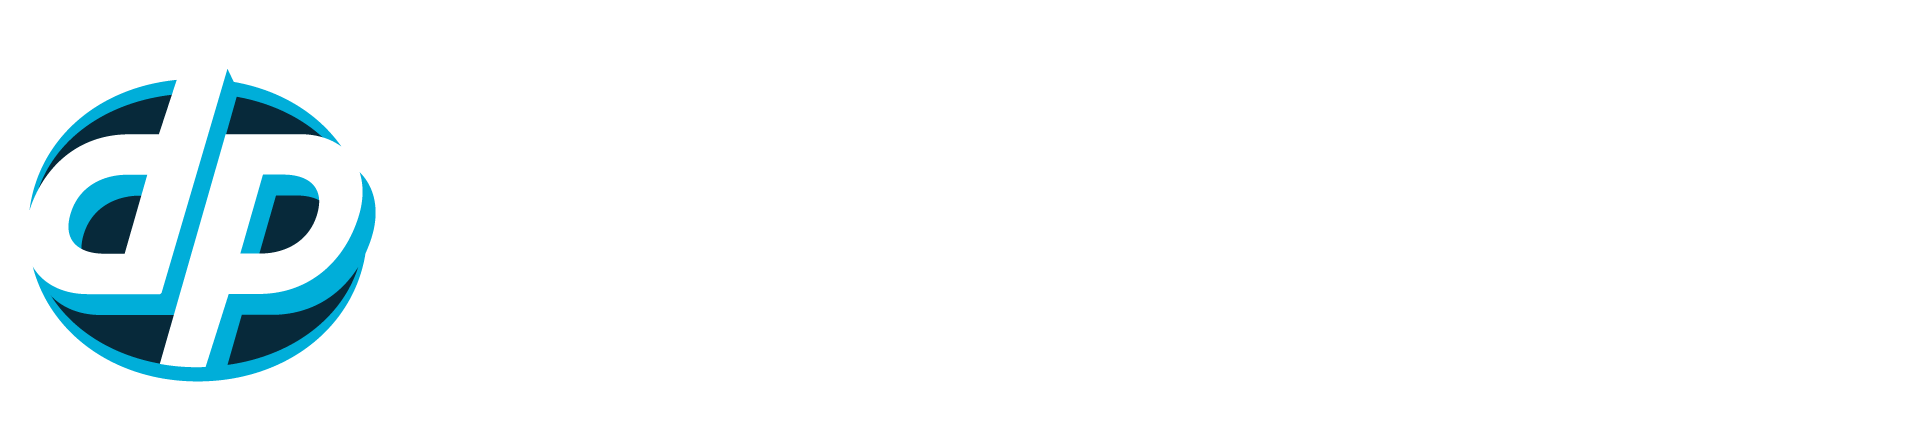 Dott Products